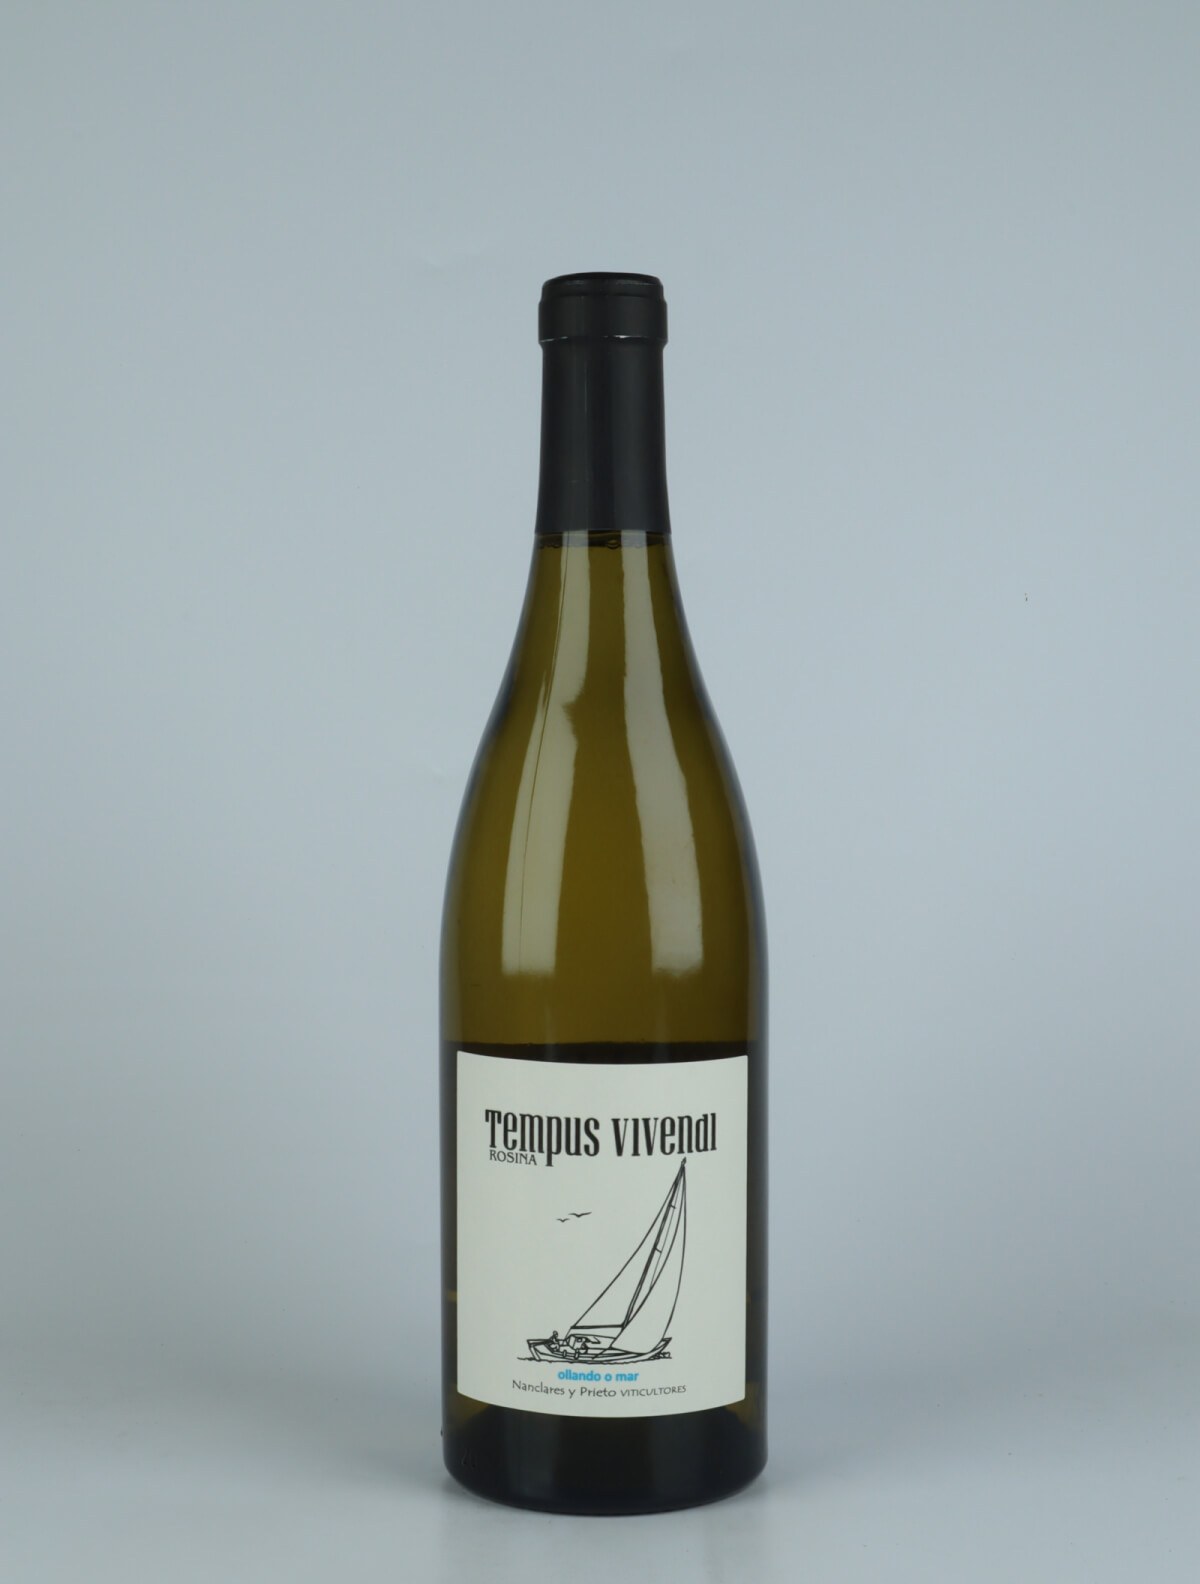 A bottle 2022 Tempus Vivendi White wine from Alberto Nanclares, Rias Baixas in Spain